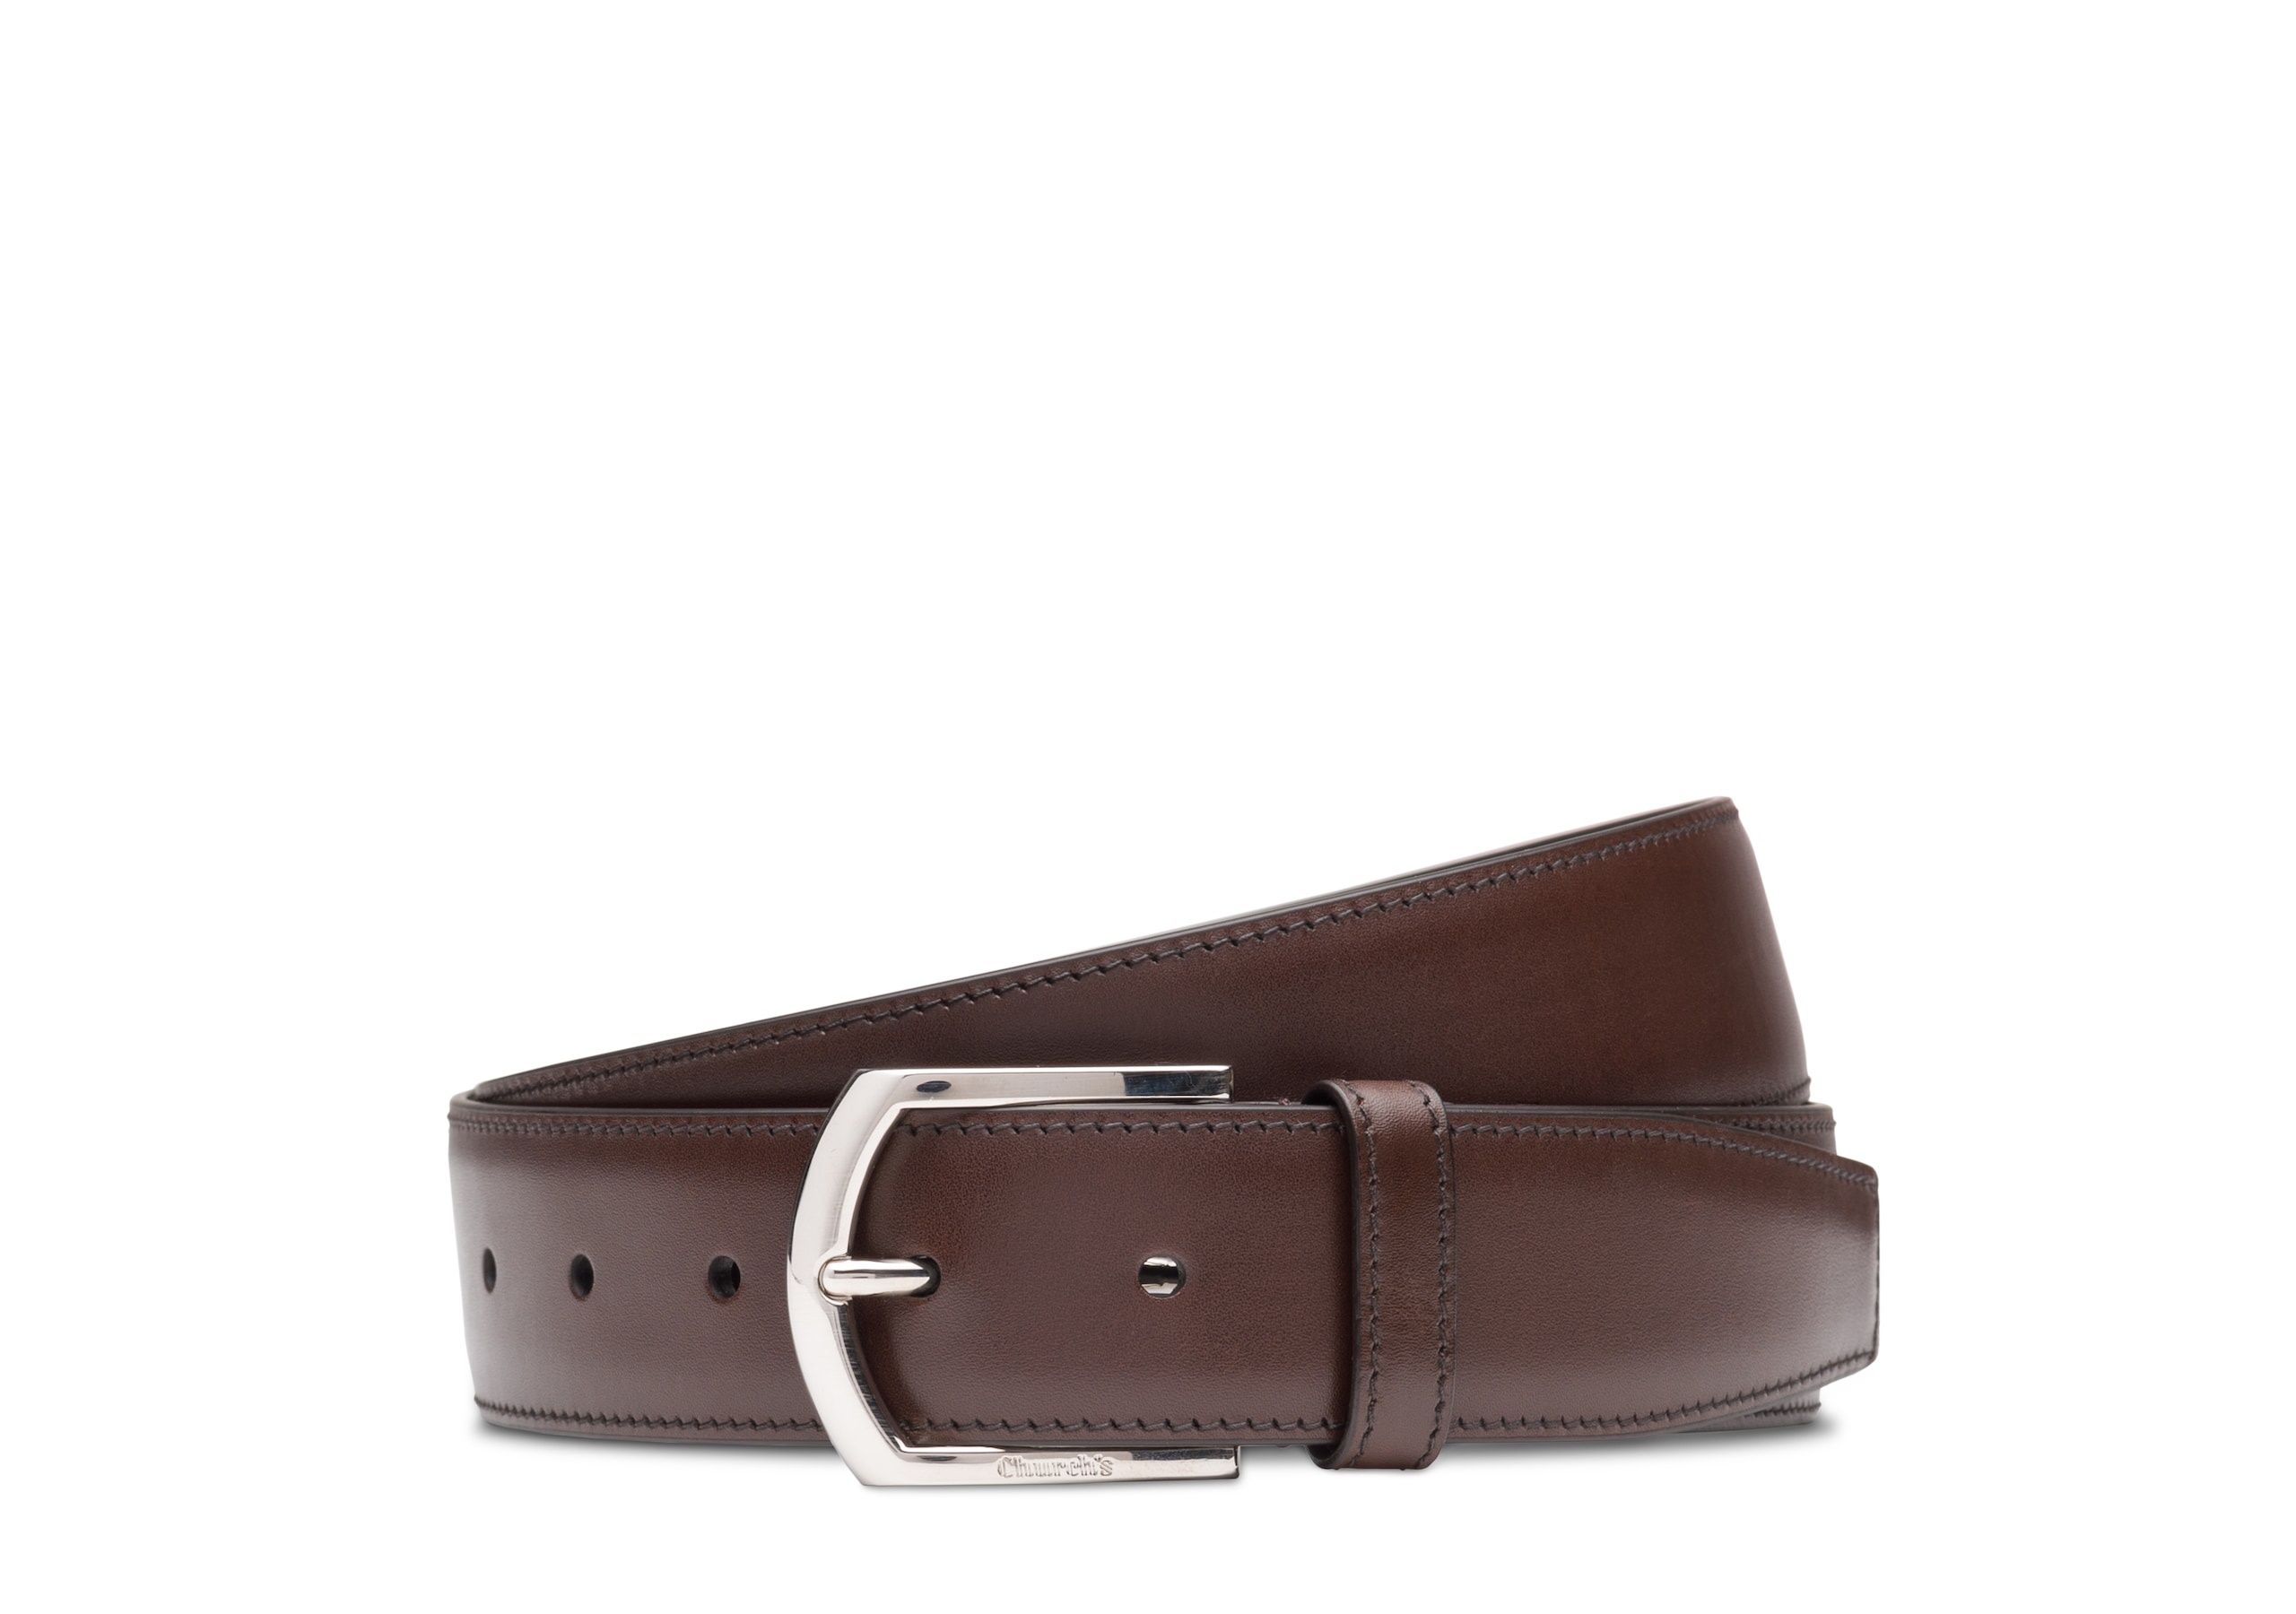 Classic buckle belt
Nevada Leather Ebony - 1